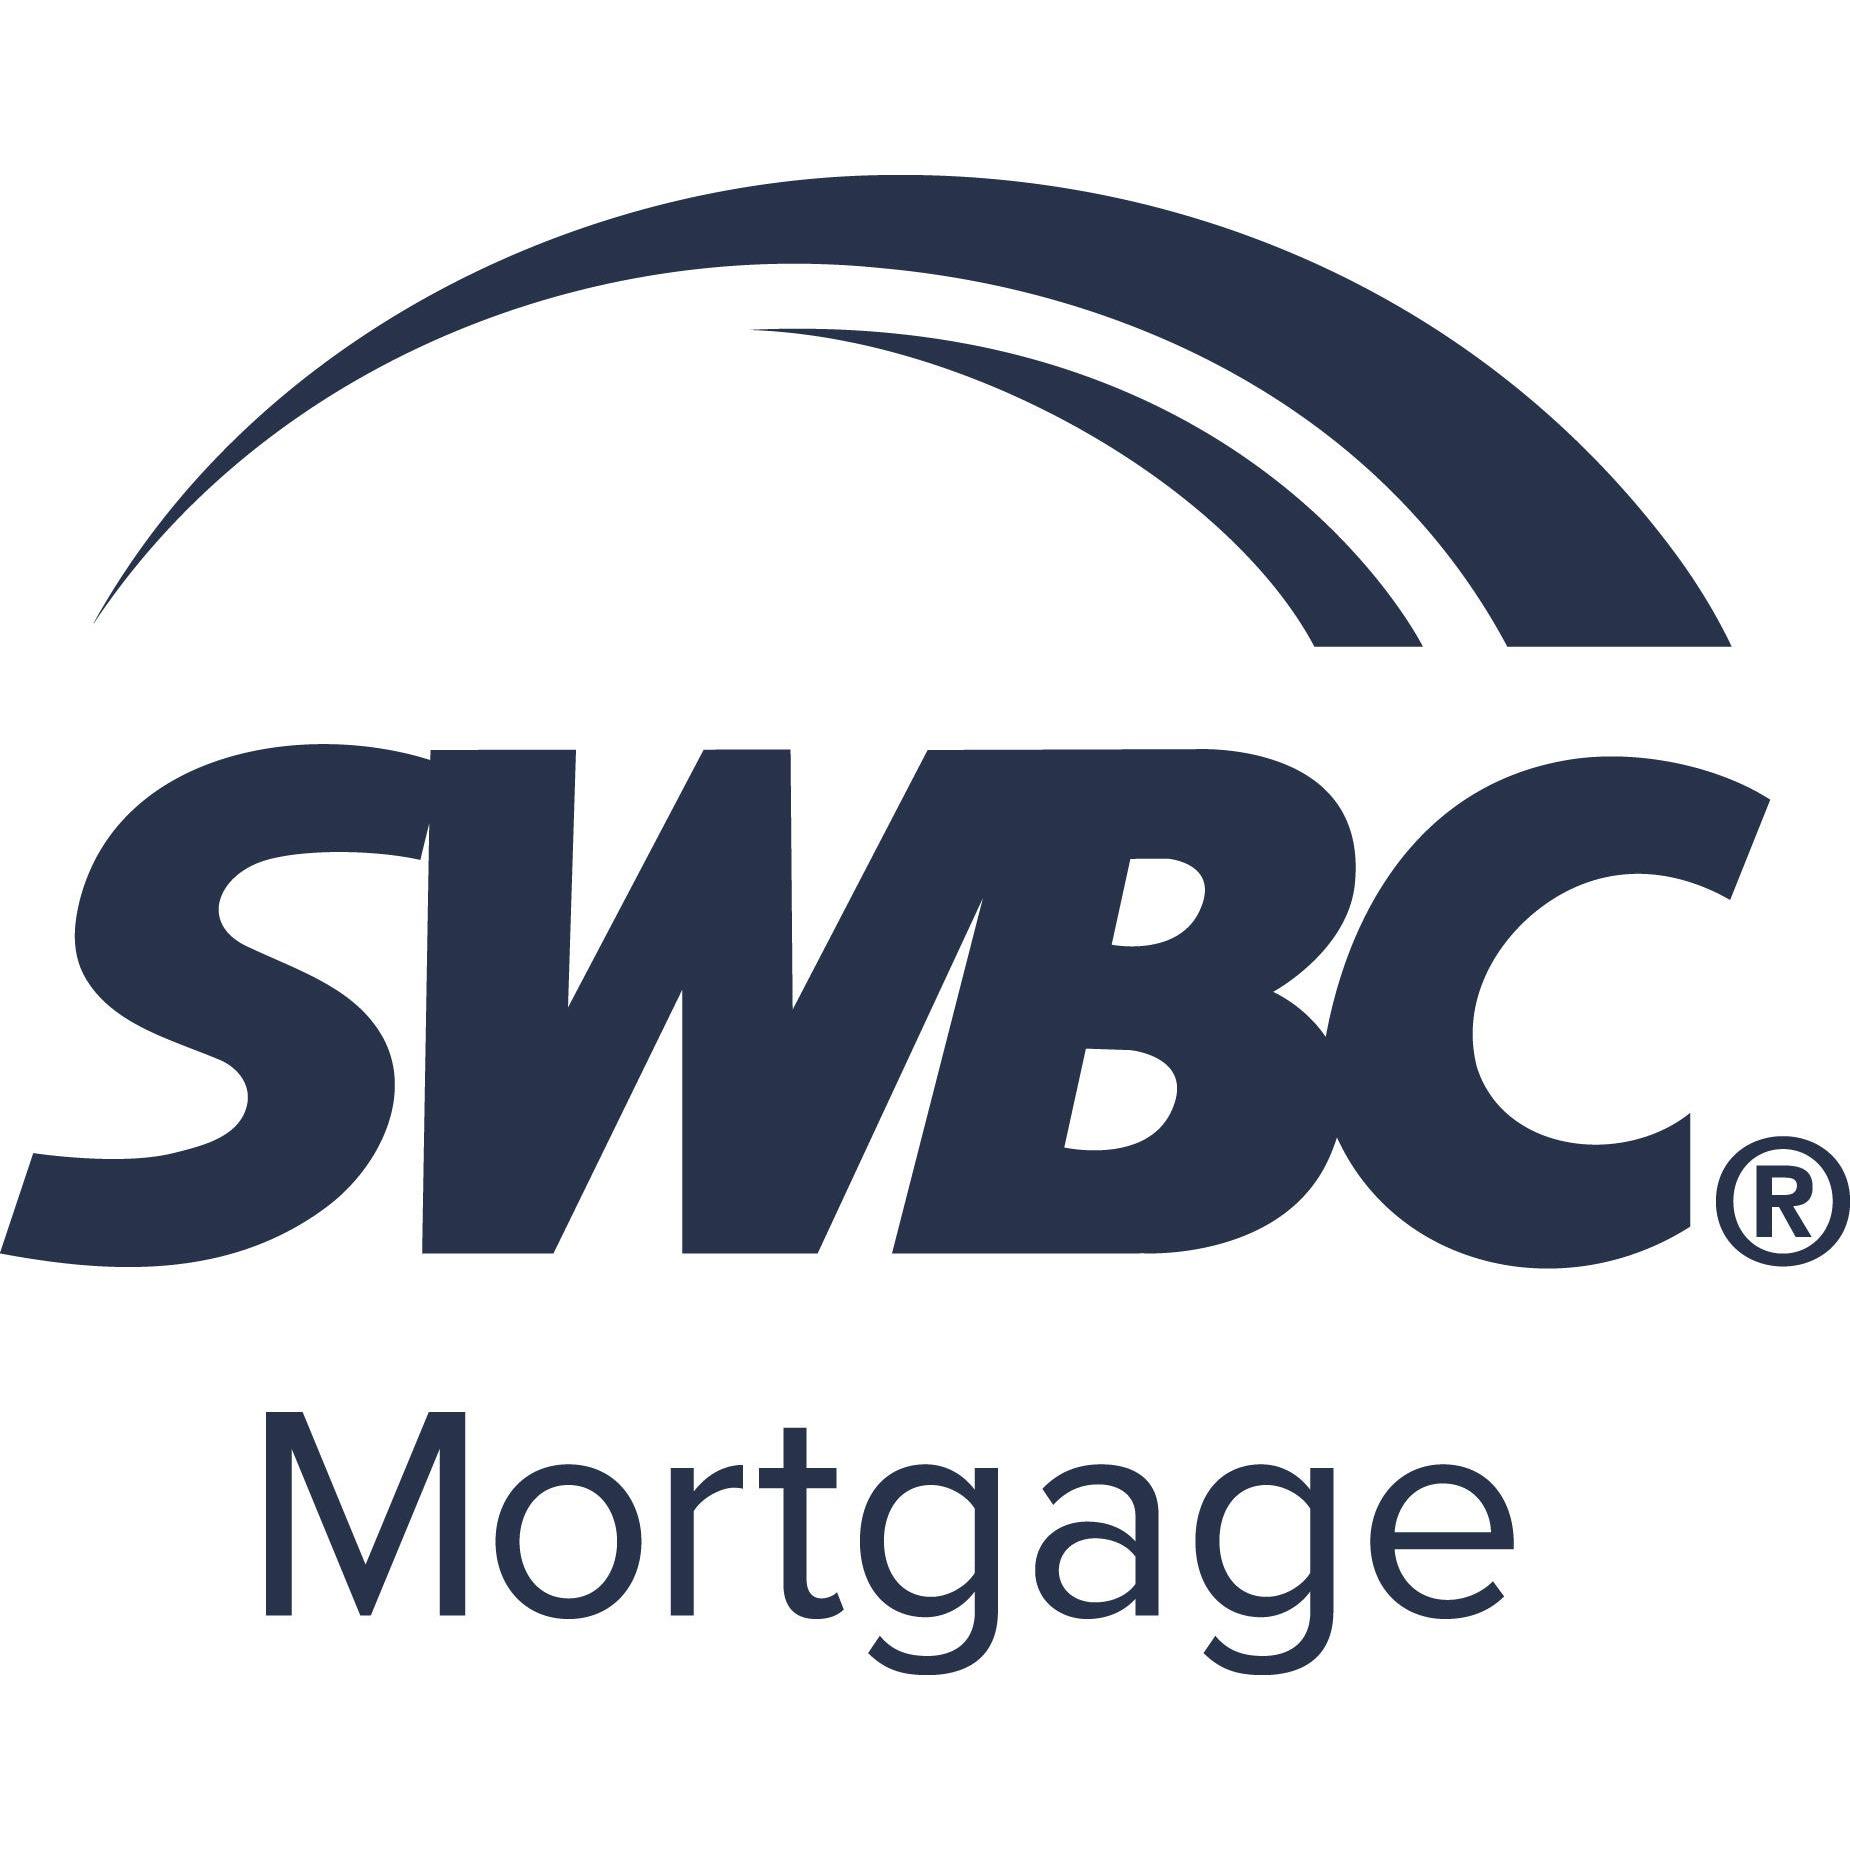 Ruth Perez, SWBC Mortgage - Brentwood, TN 37027 - (615)506-4841 | ShowMeLocal.com